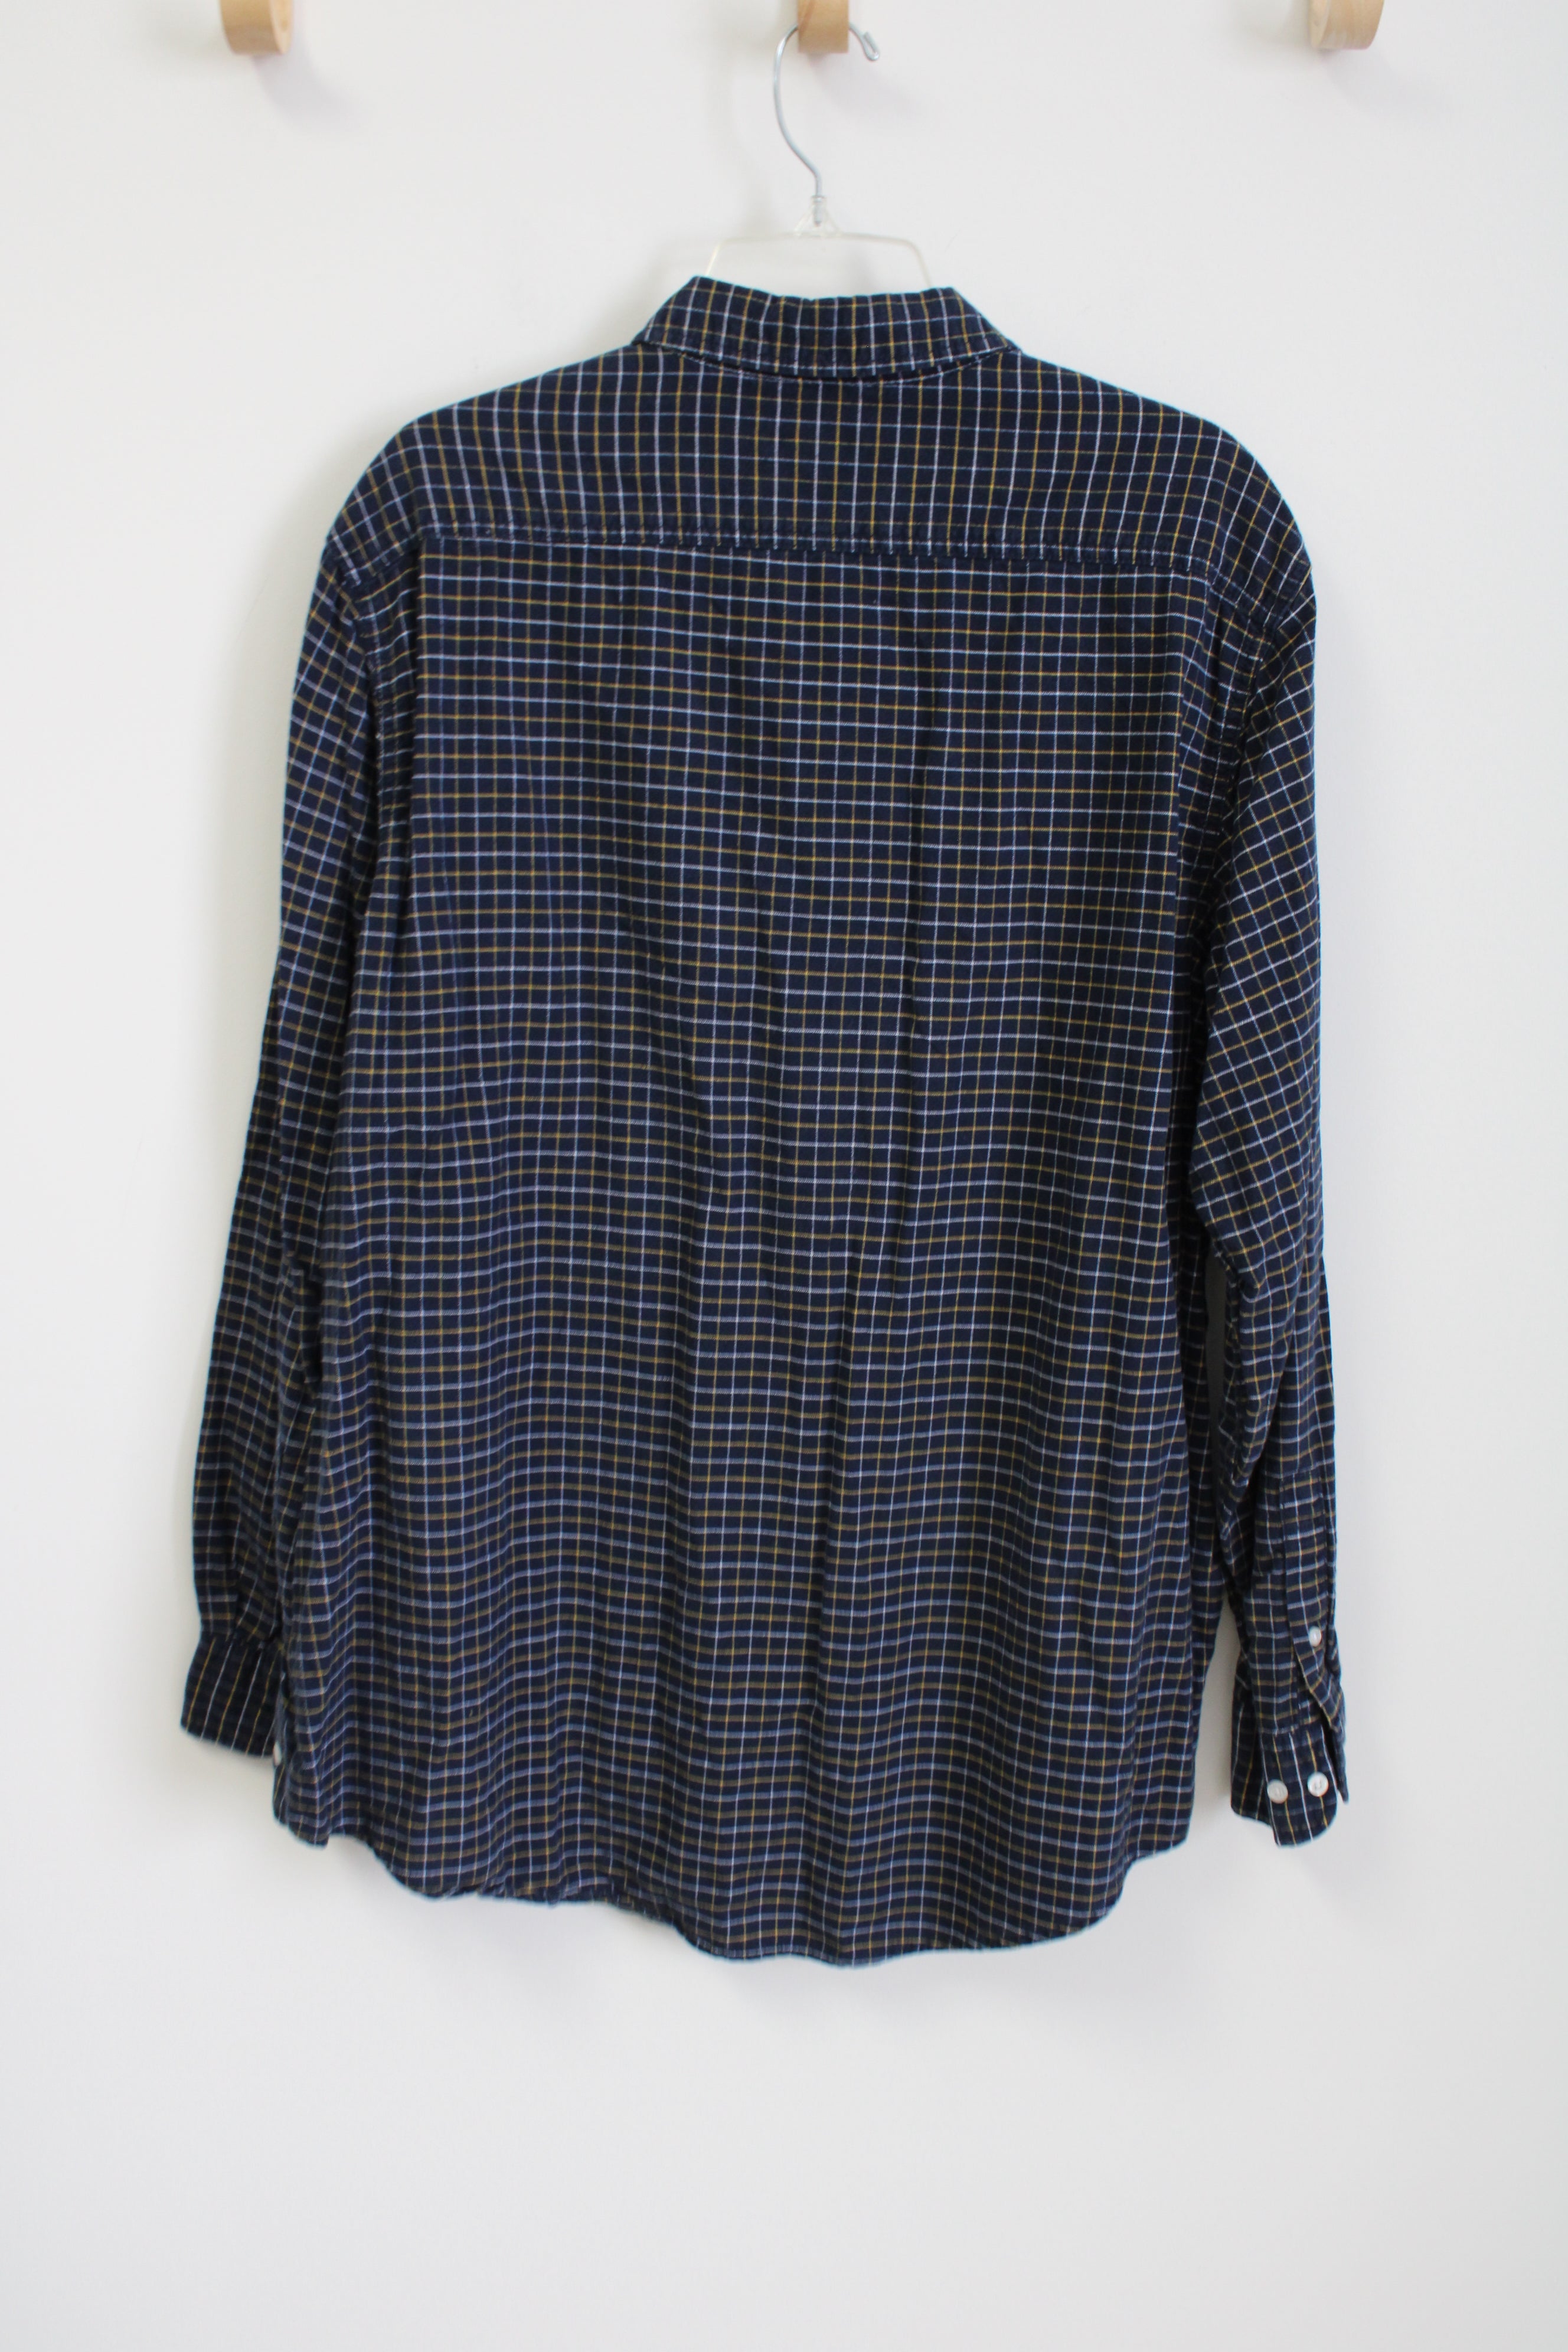 George Blue Plaid Button Down Flannel | XL